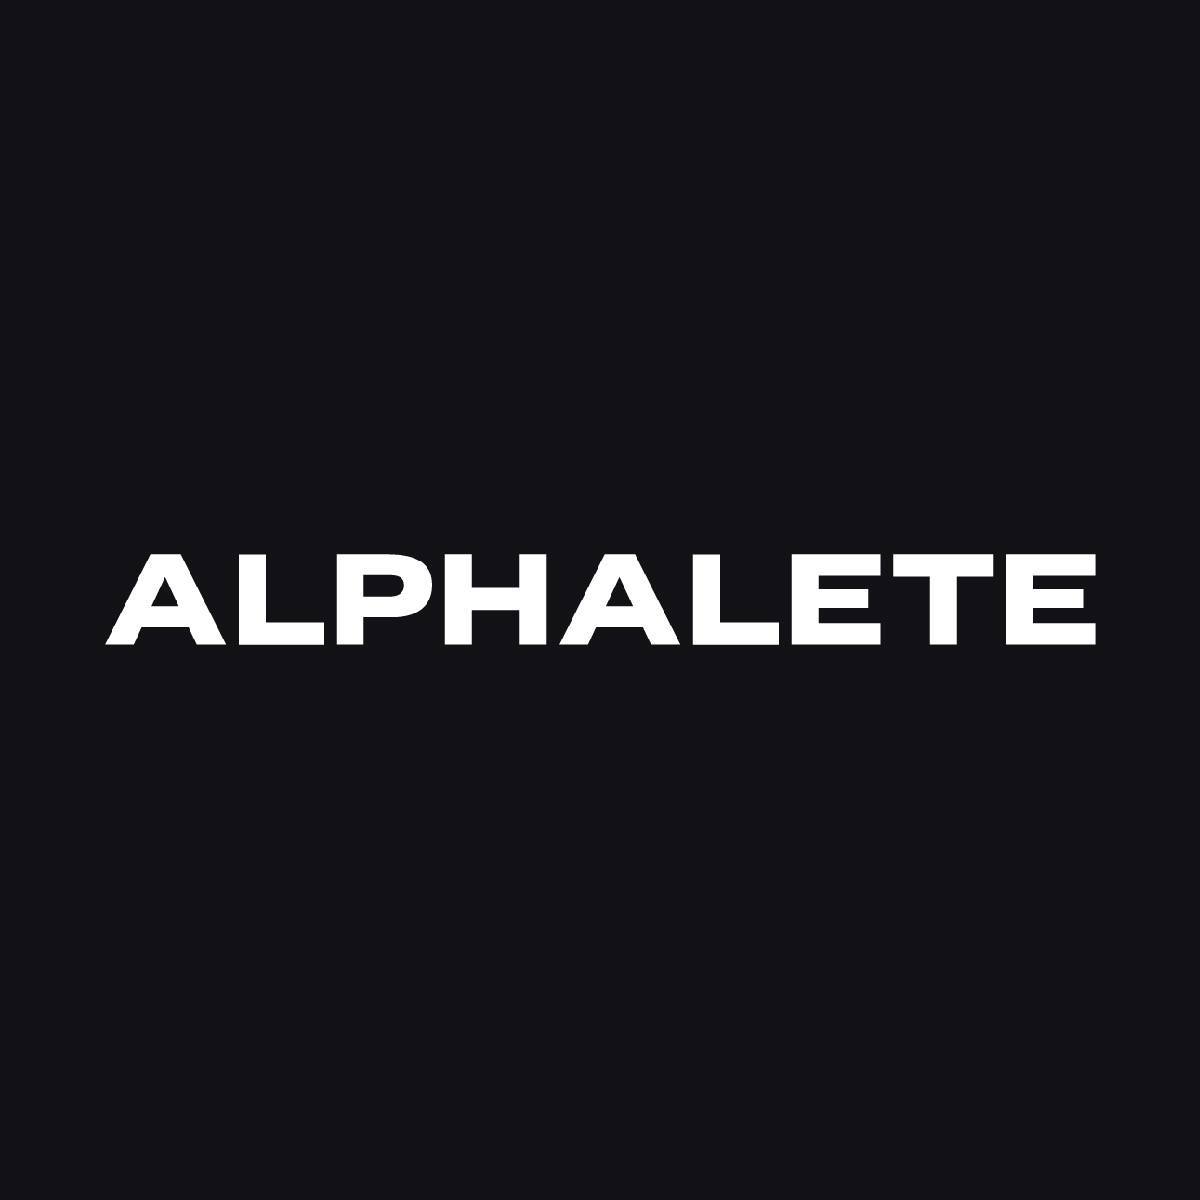 Company logo of Alphalete Athletics